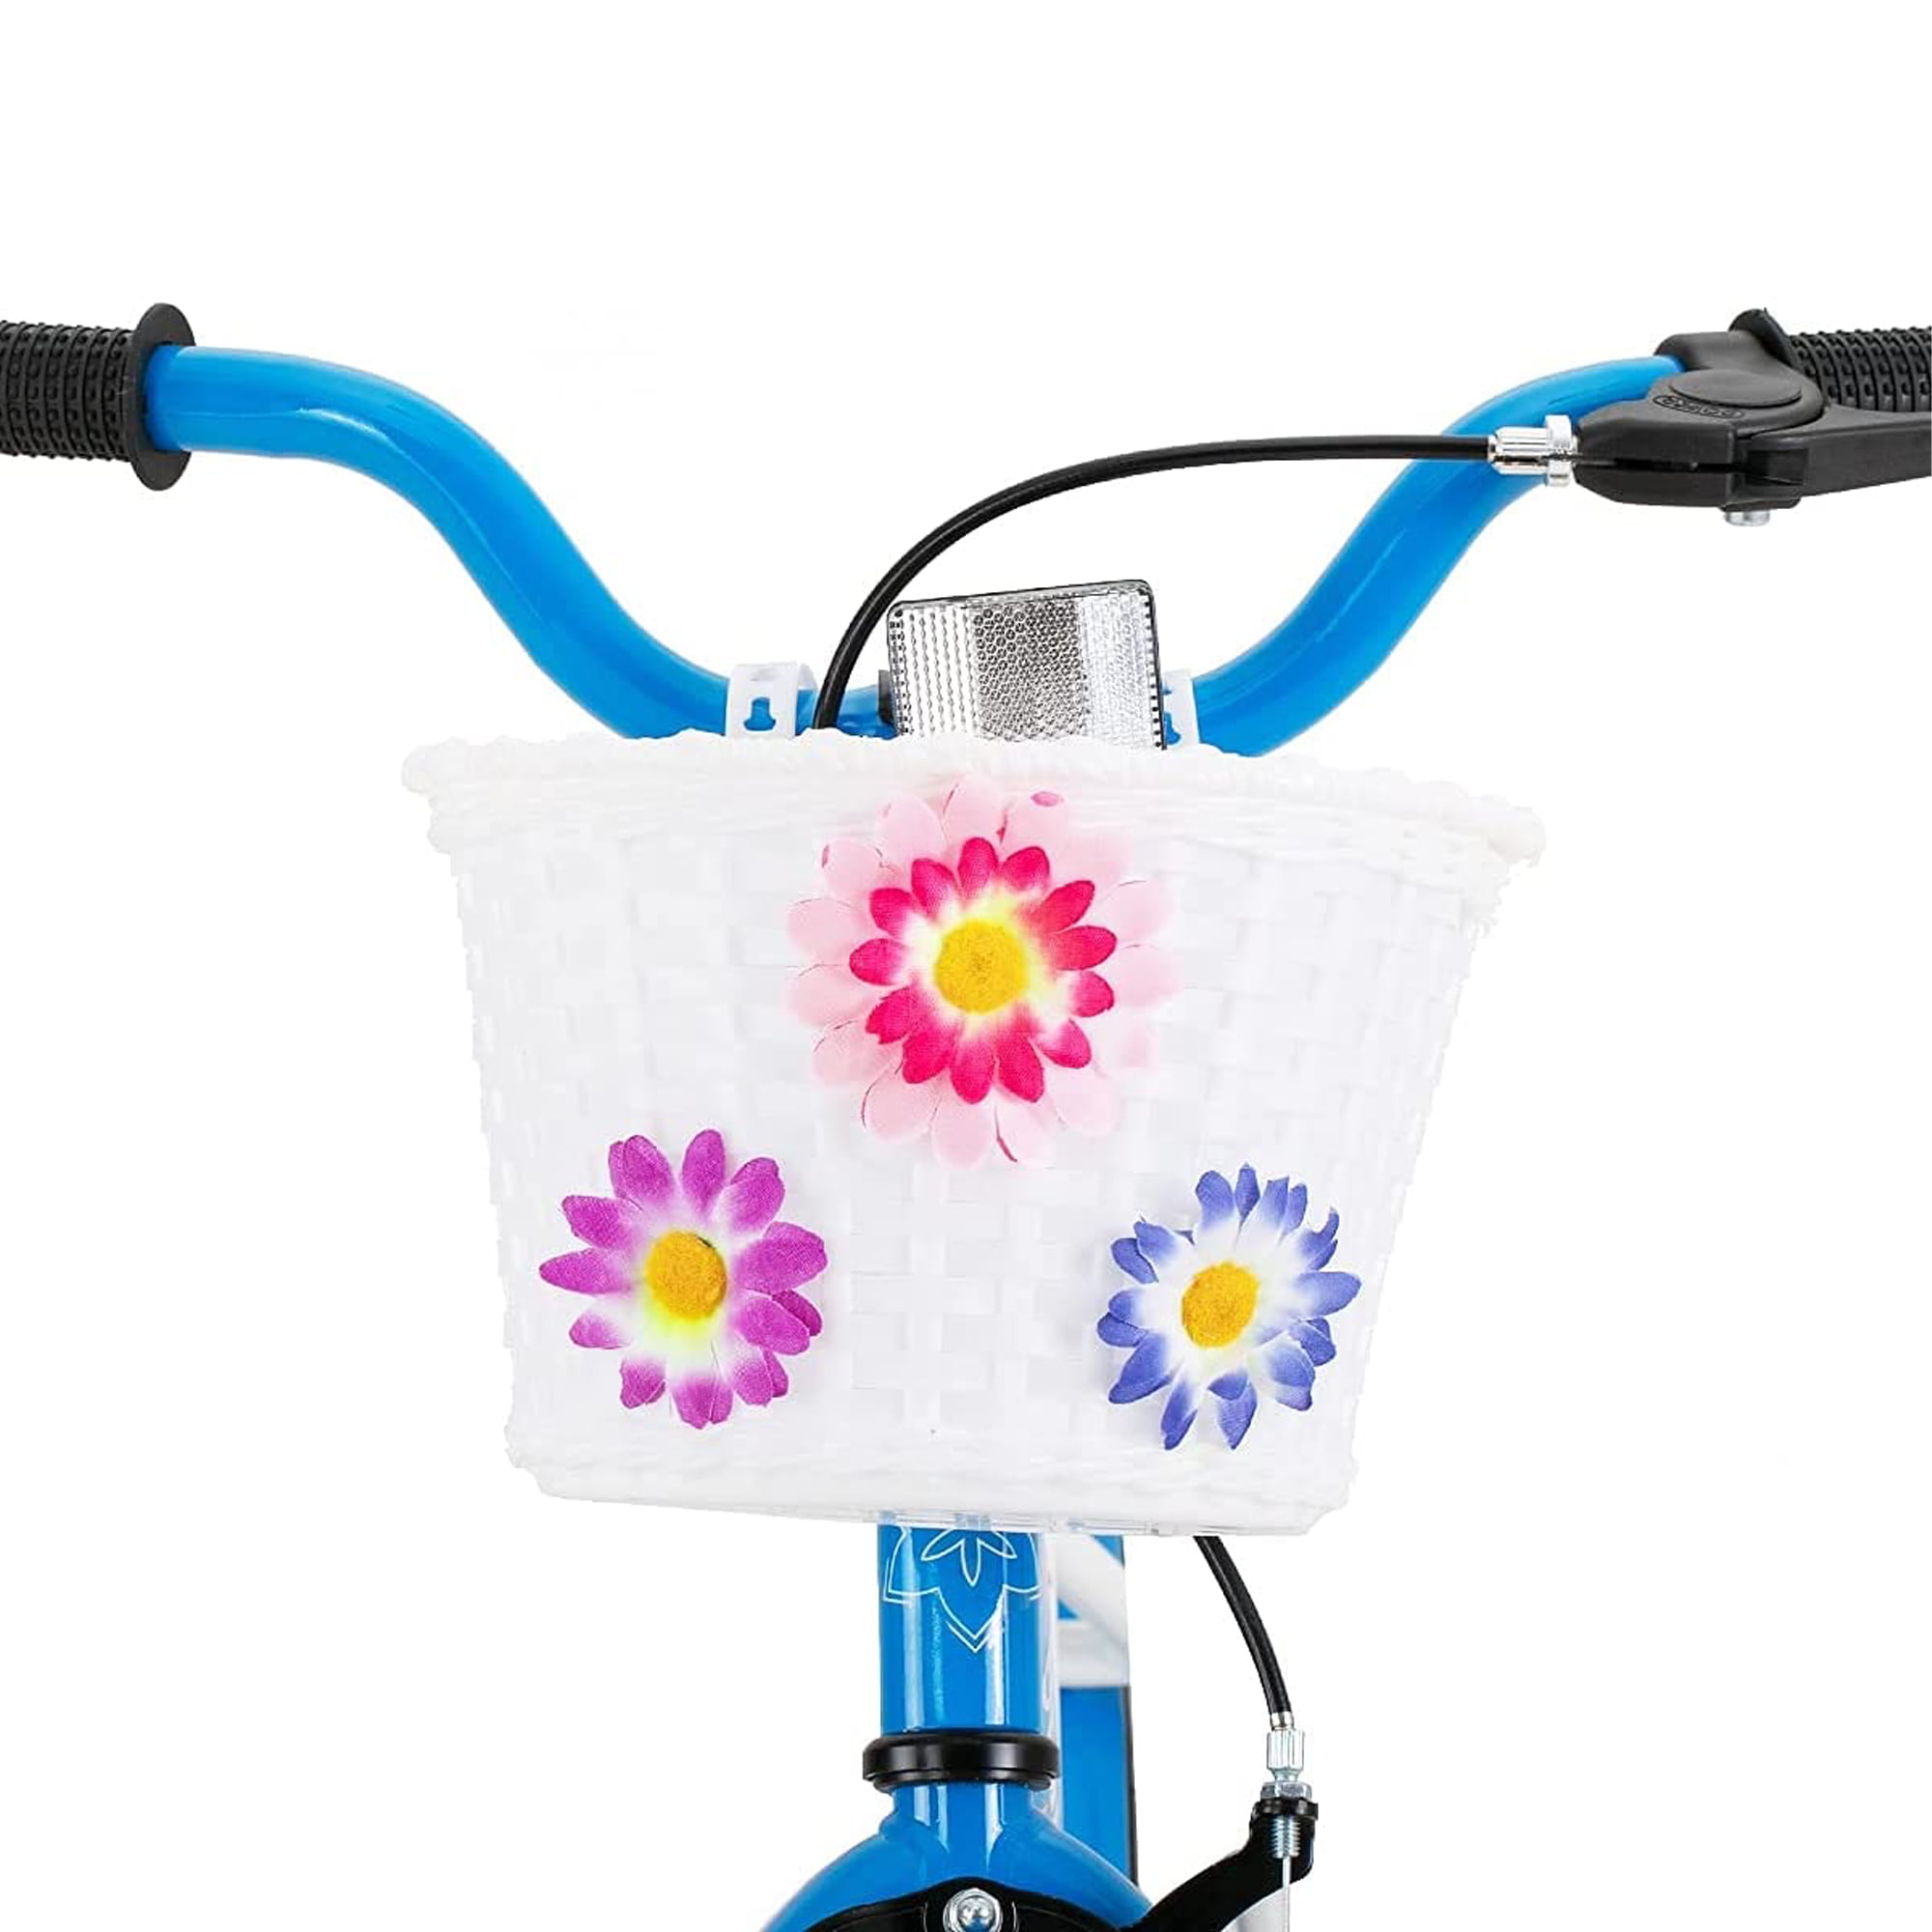 Blue JOYSTAR Starry Girls Bike for Girls Ages 3-5 with Training Wheels 14" 